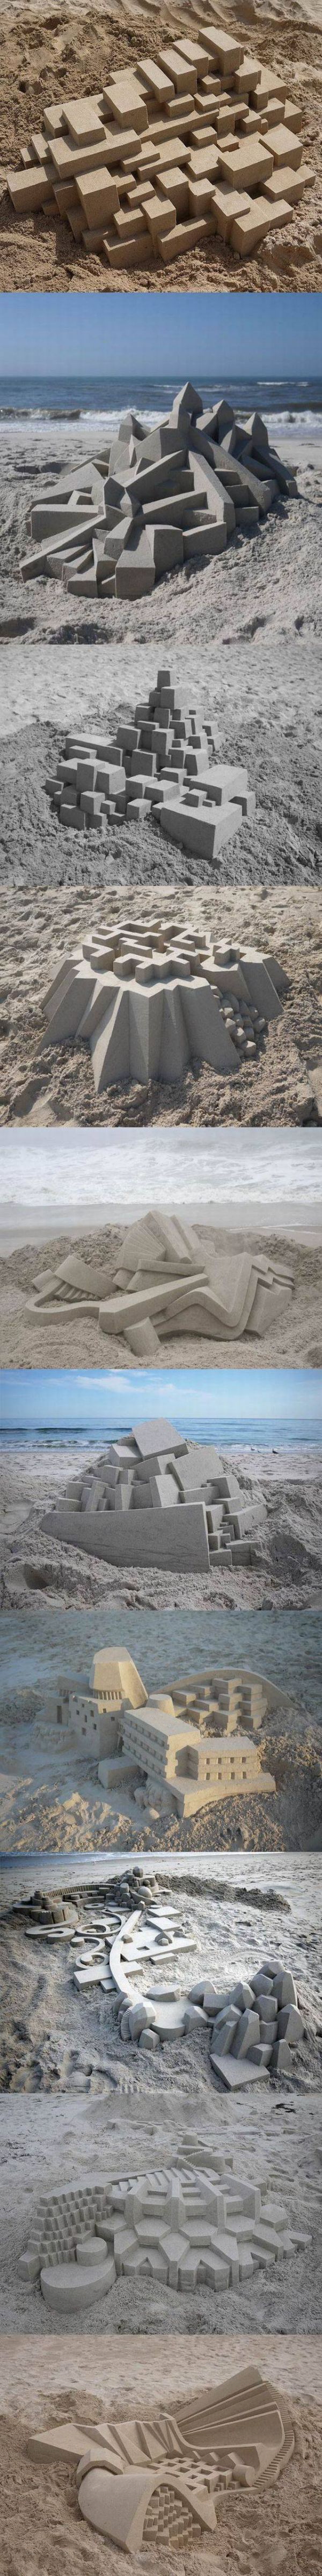 Sand, Architektur, Formen, Kunst, Strand